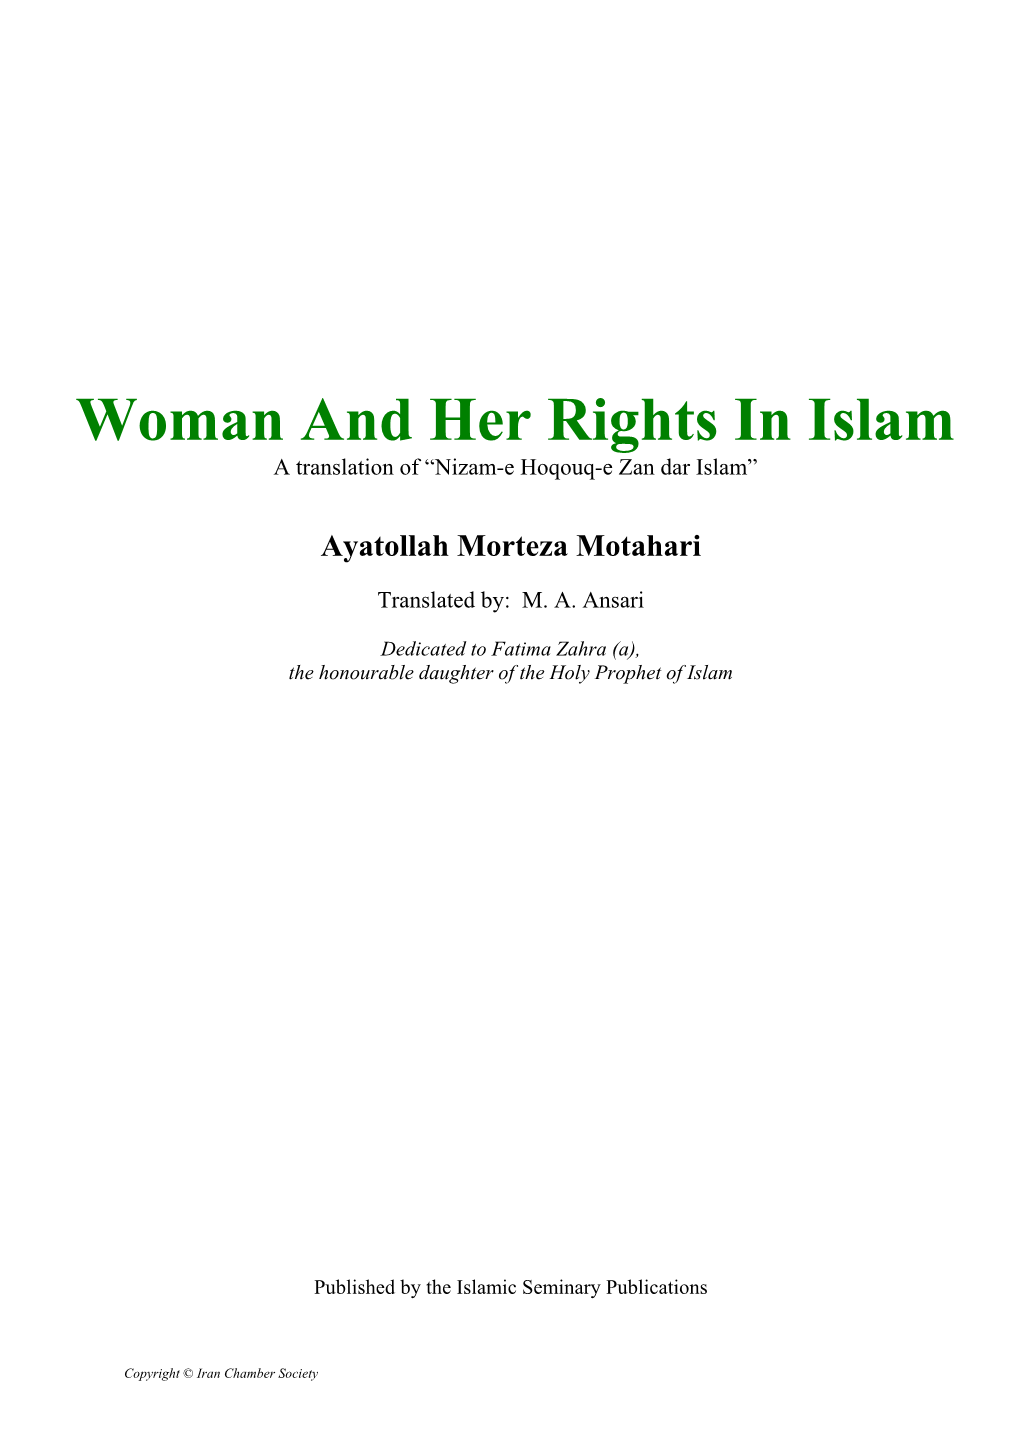 Woman and Her Rights in Islam a Translation of “Nizam-E Hoqouq-E Zan Dar Islam”